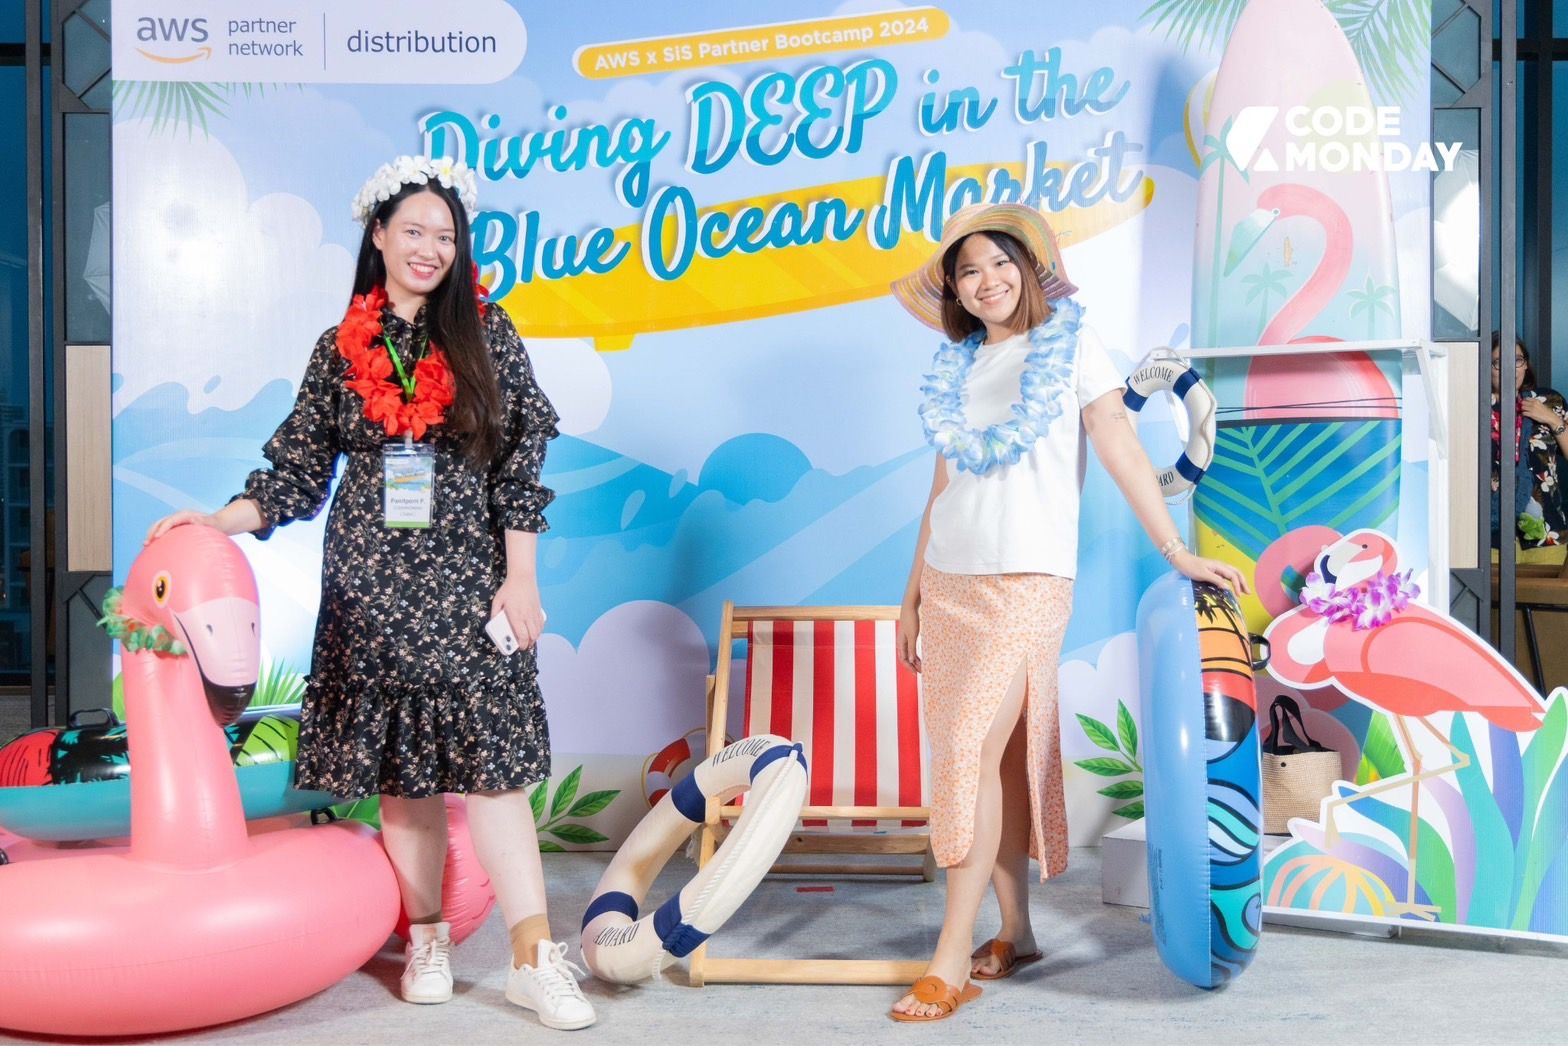 AWS x SiS Partner Bootcamp 2024 - Diving Deep in the Blue Ocean Market